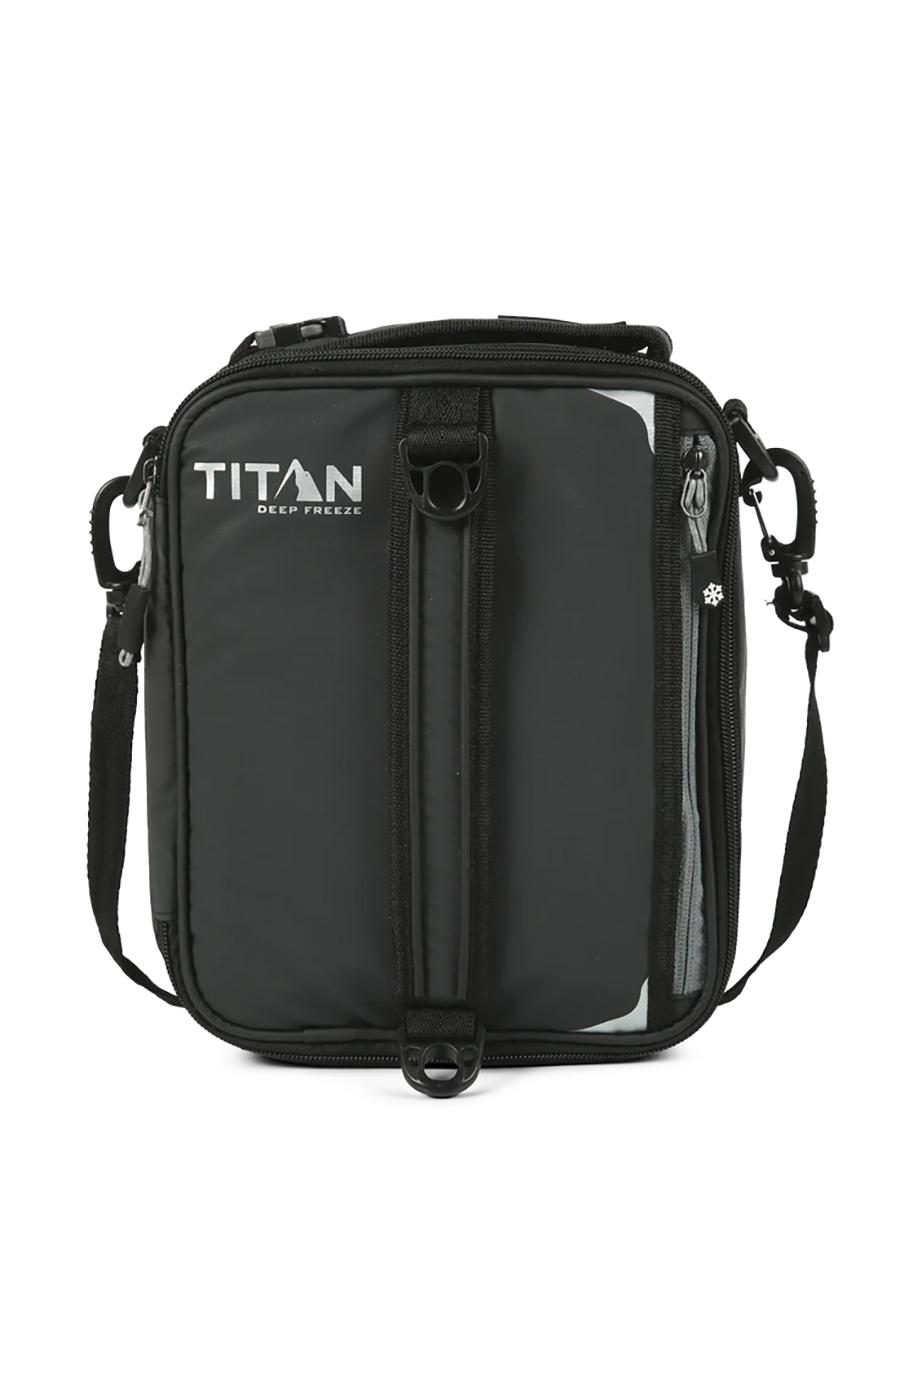 Arctic Zone Titan Expandable Lunch Bag - Black; image 1 of 3